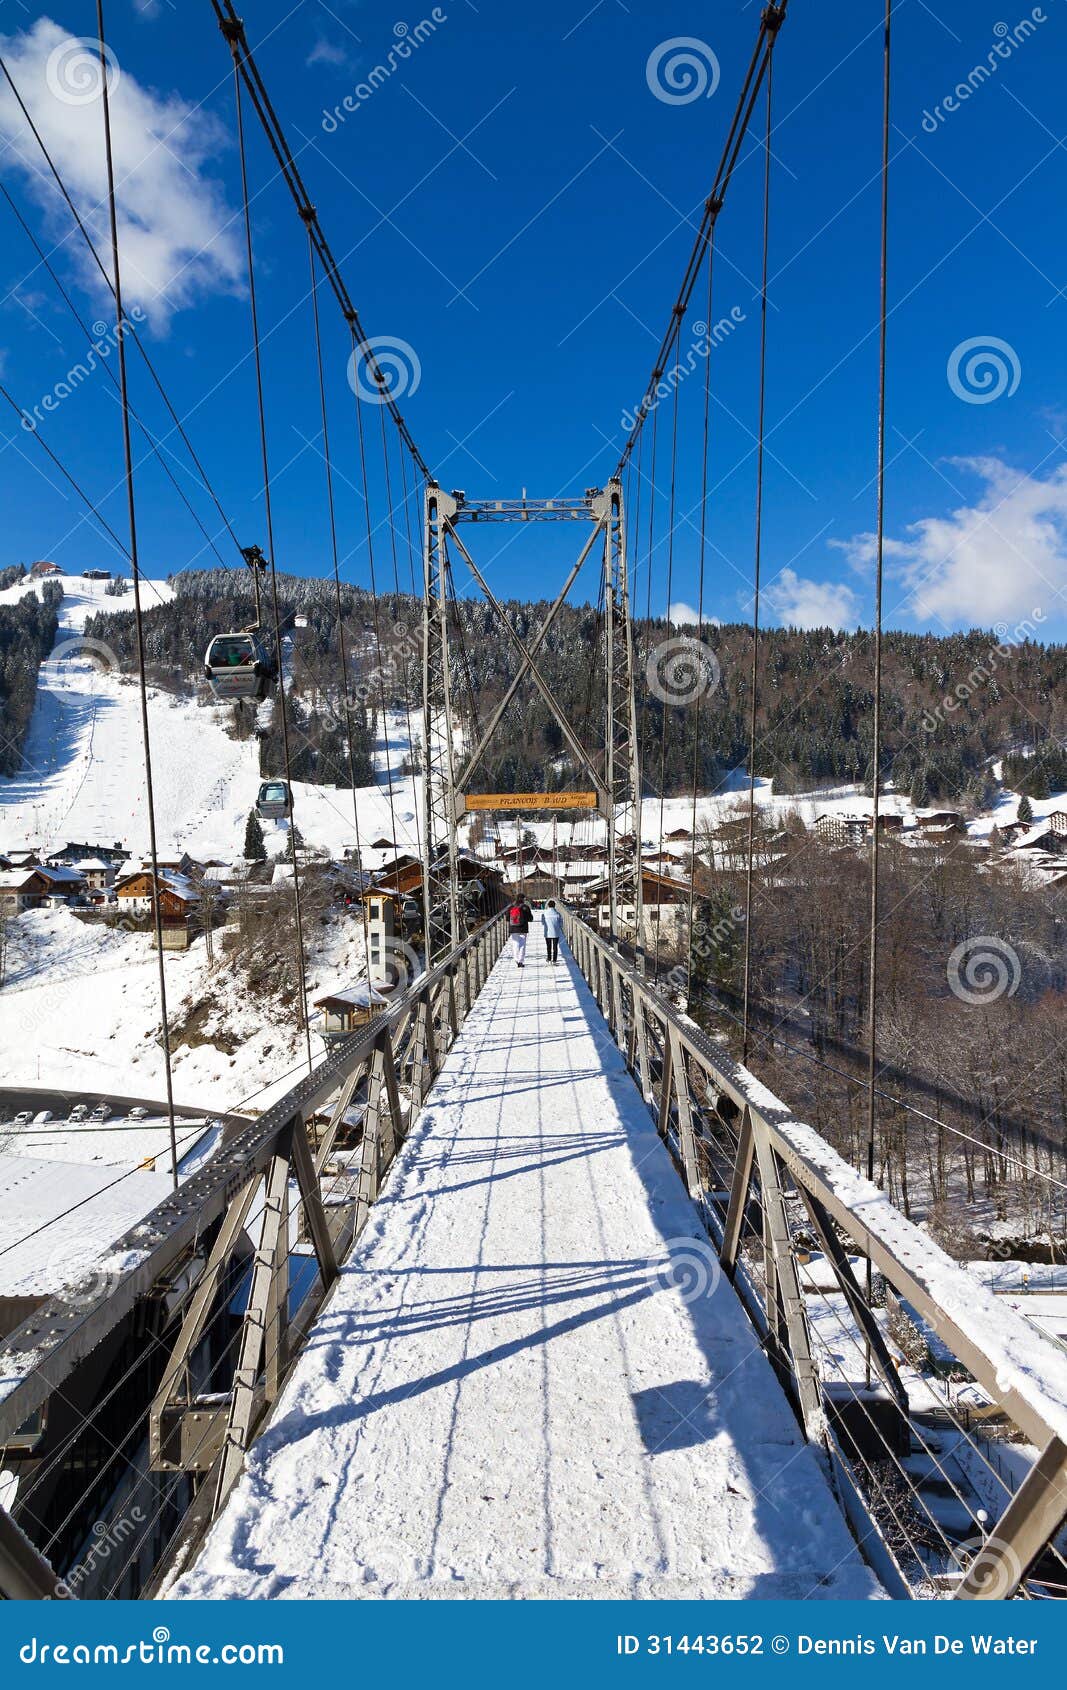 Morzine bridge. Suspension bridge connecting the village of Morzine, France, on a sunny winter day